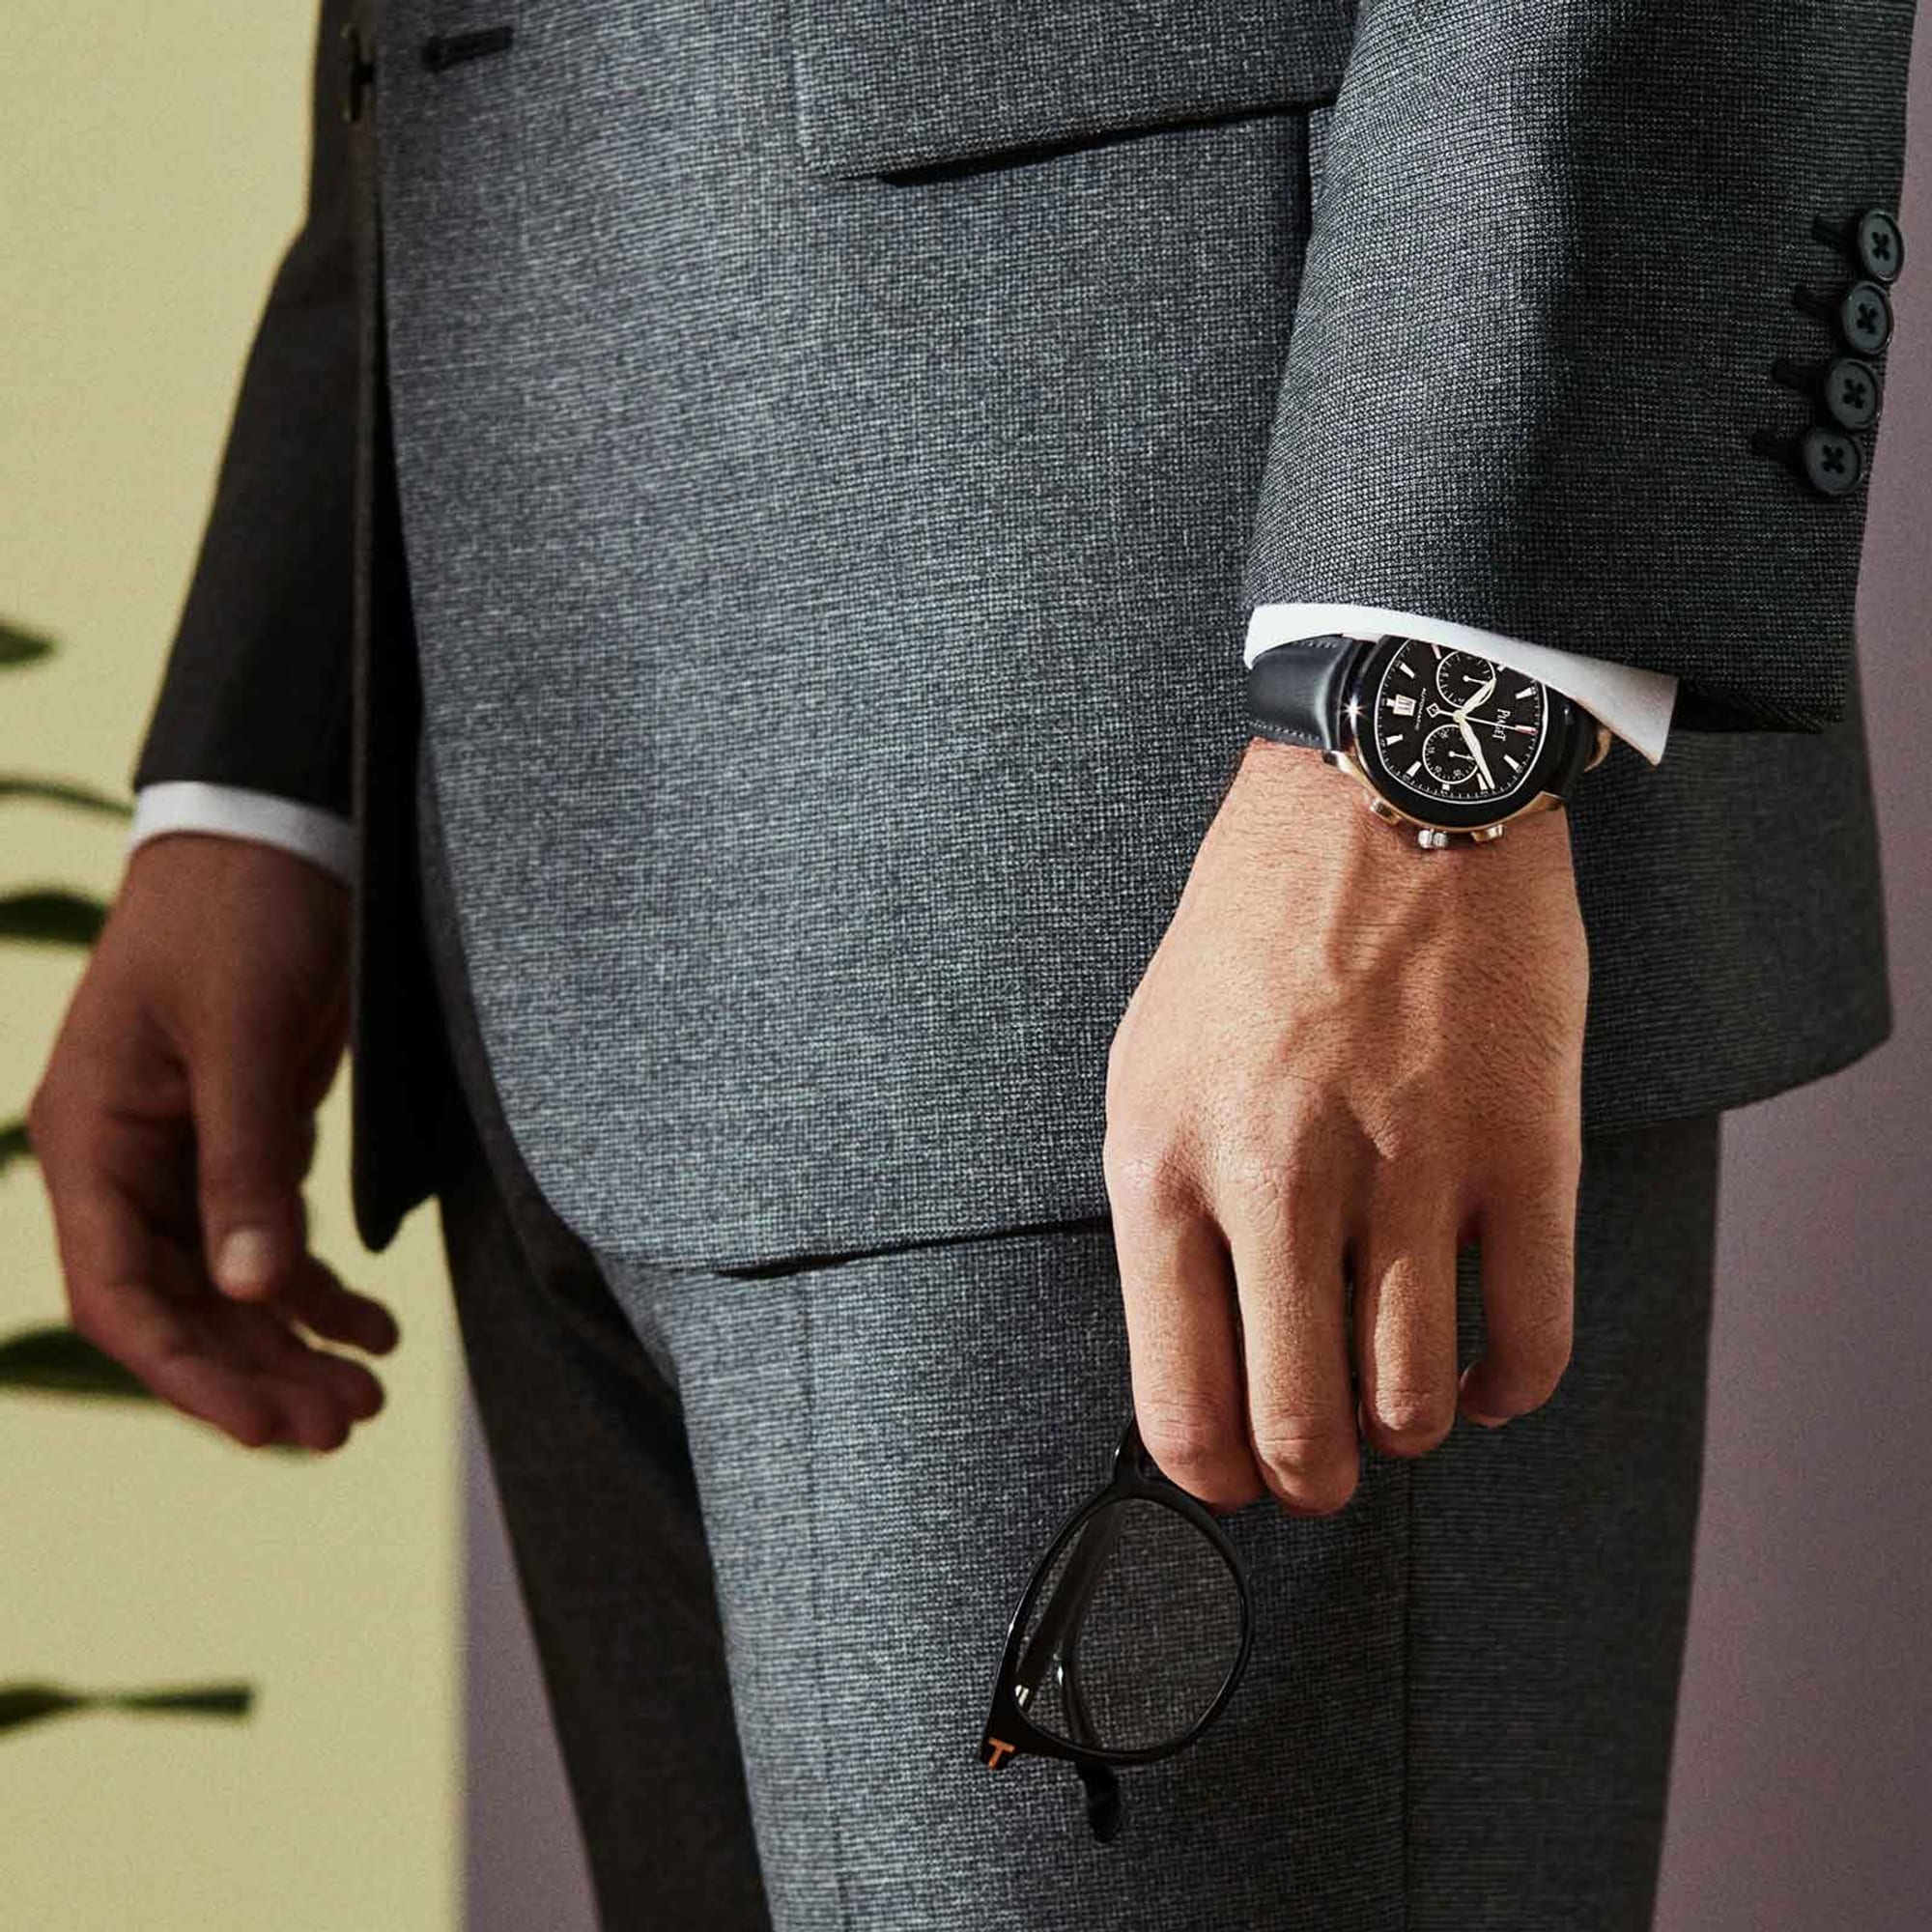 Steel Chronograph Watch - Piaget Luxury Men’s Watch G0A42002